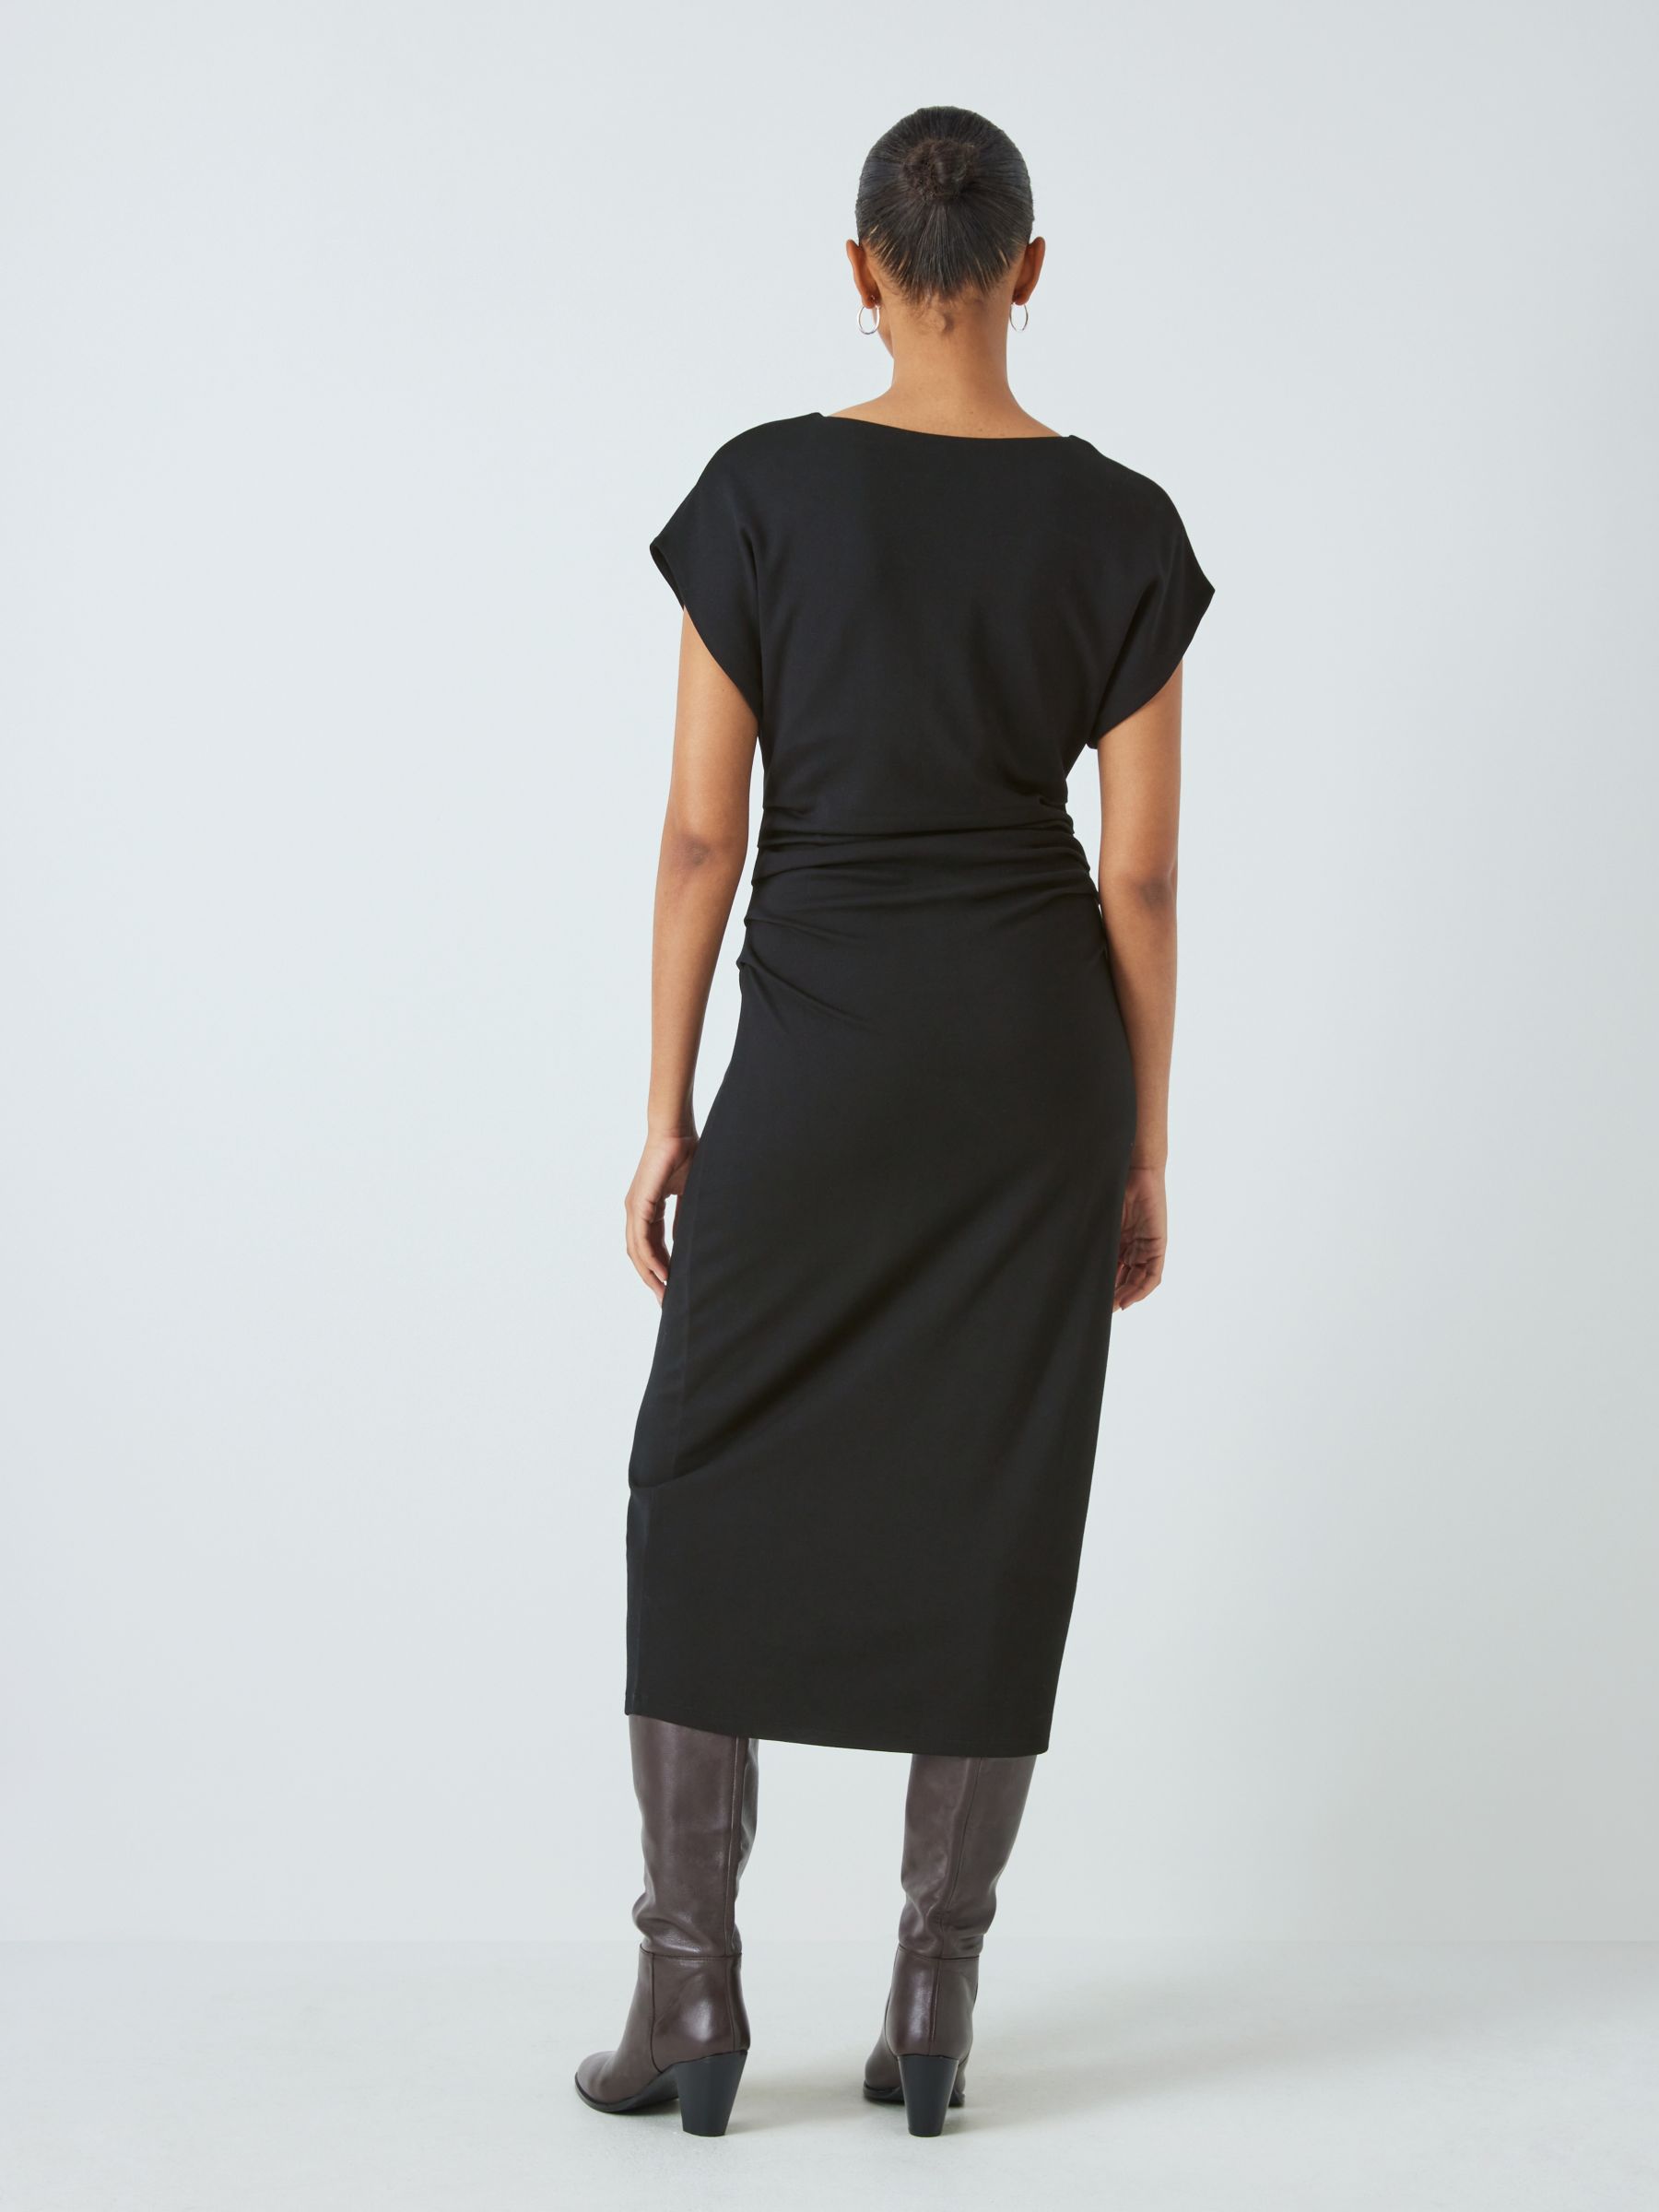 Buy John Lewis Ruched Cap Sleeve Dress Online at johnlewis.com